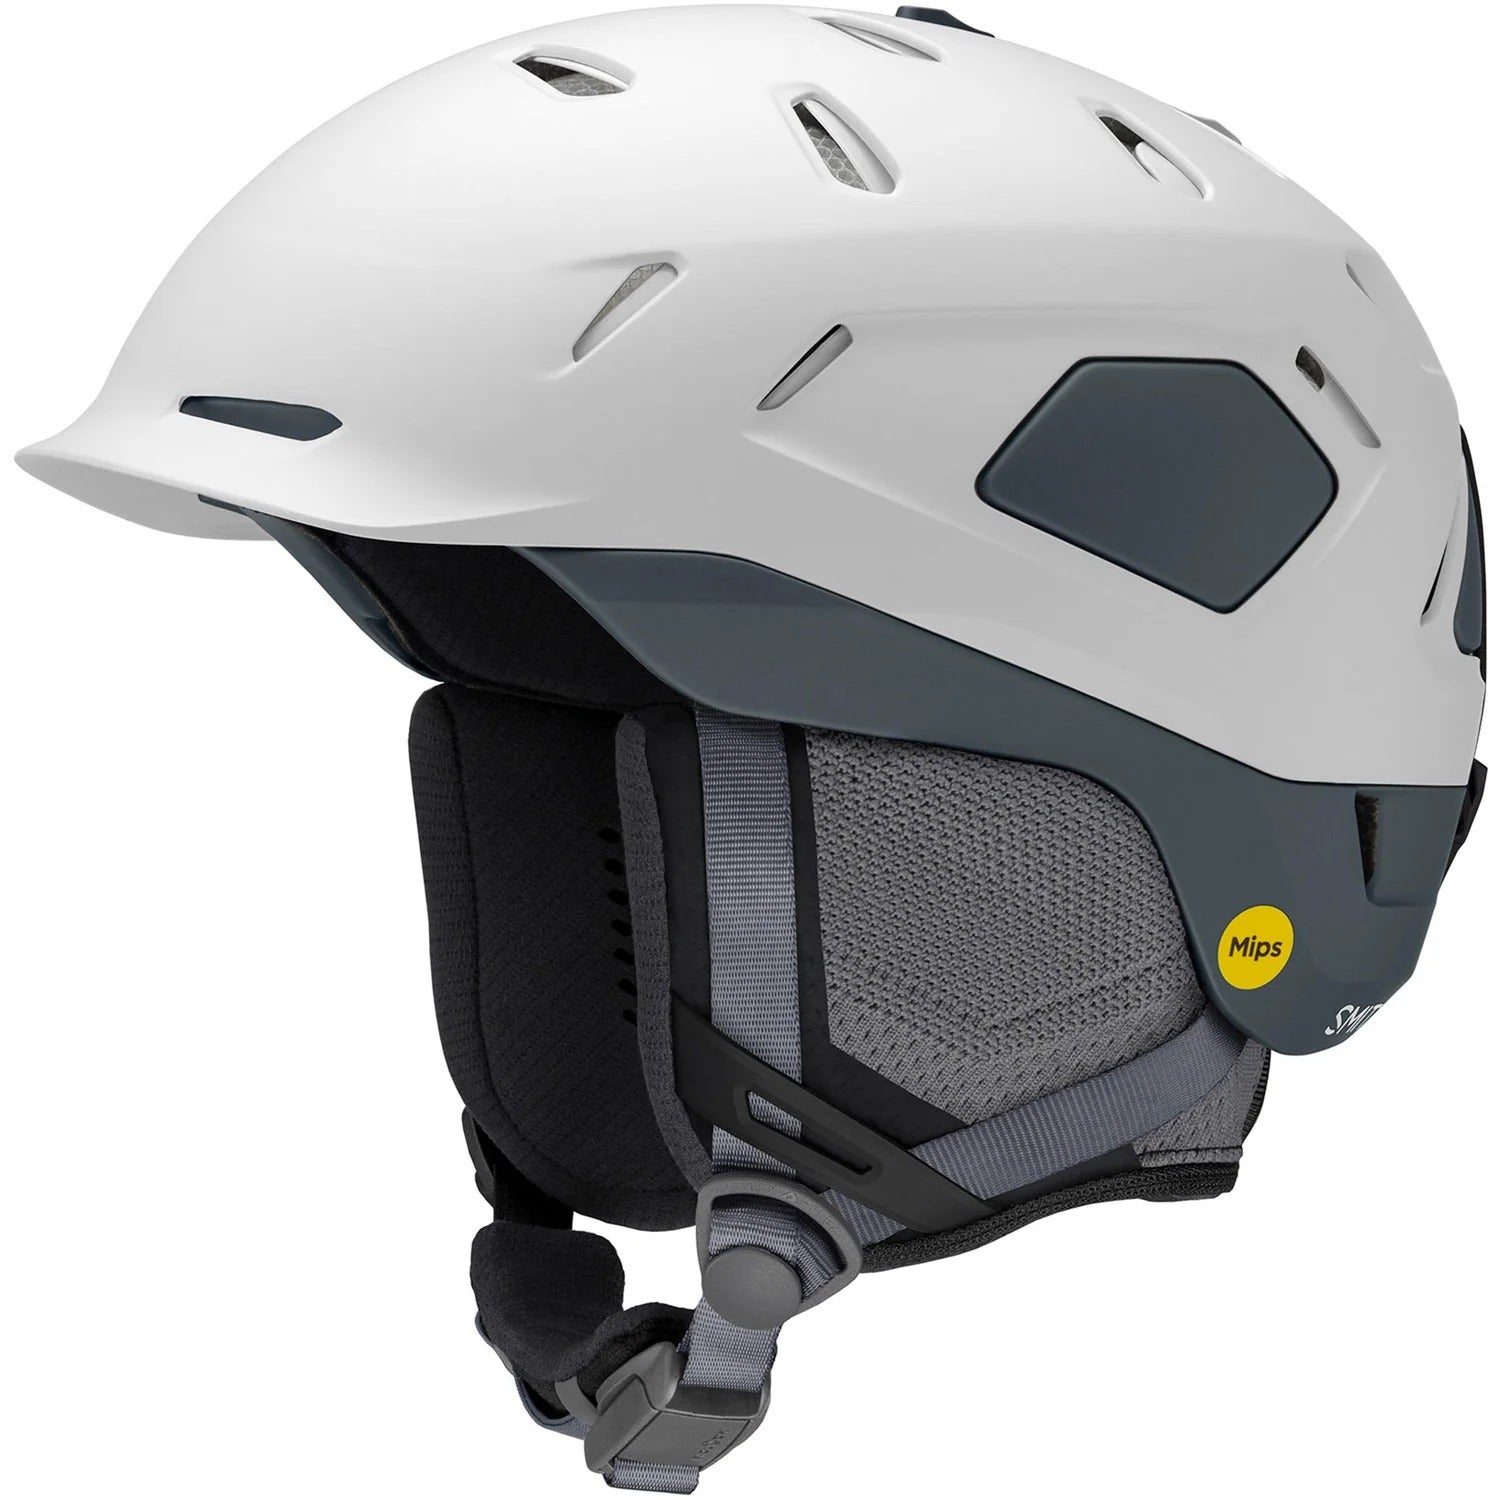 Nexus Mips Round Contour Fit Snow Helmet